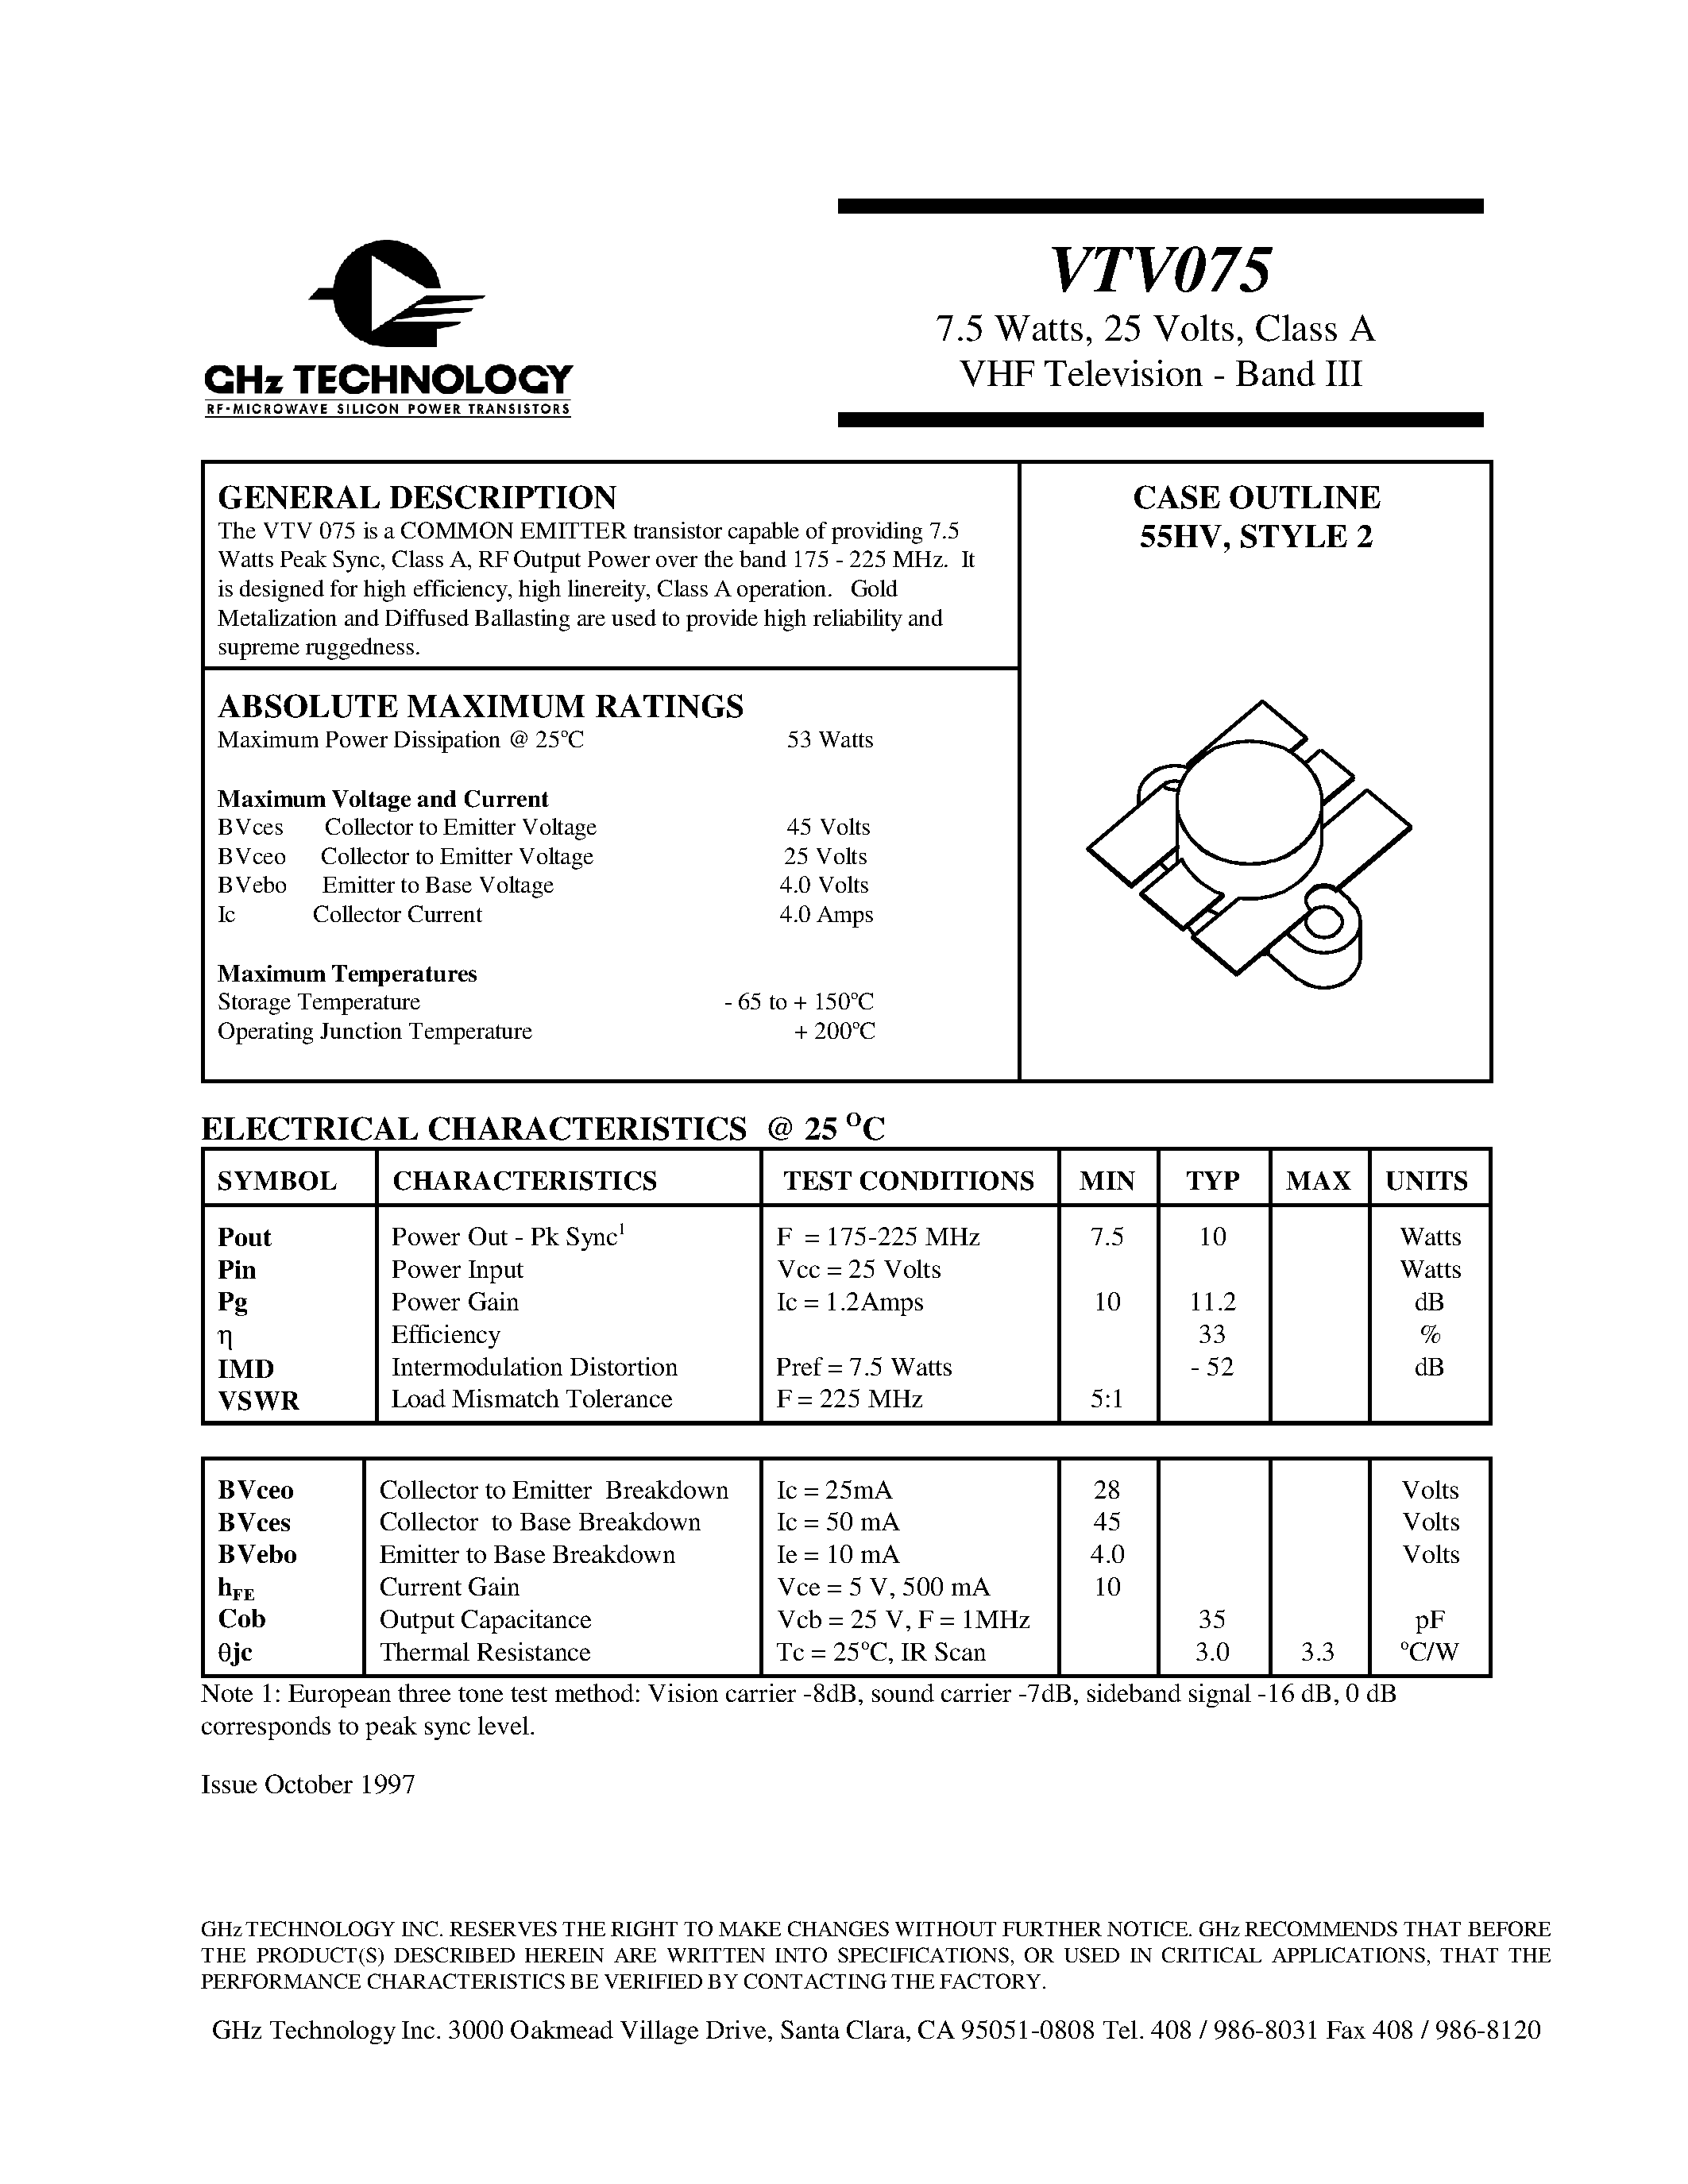 Datasheet VTV075 - 7.5 Watts/ 25 Volts/ Class A VHF Television - Band III page 1